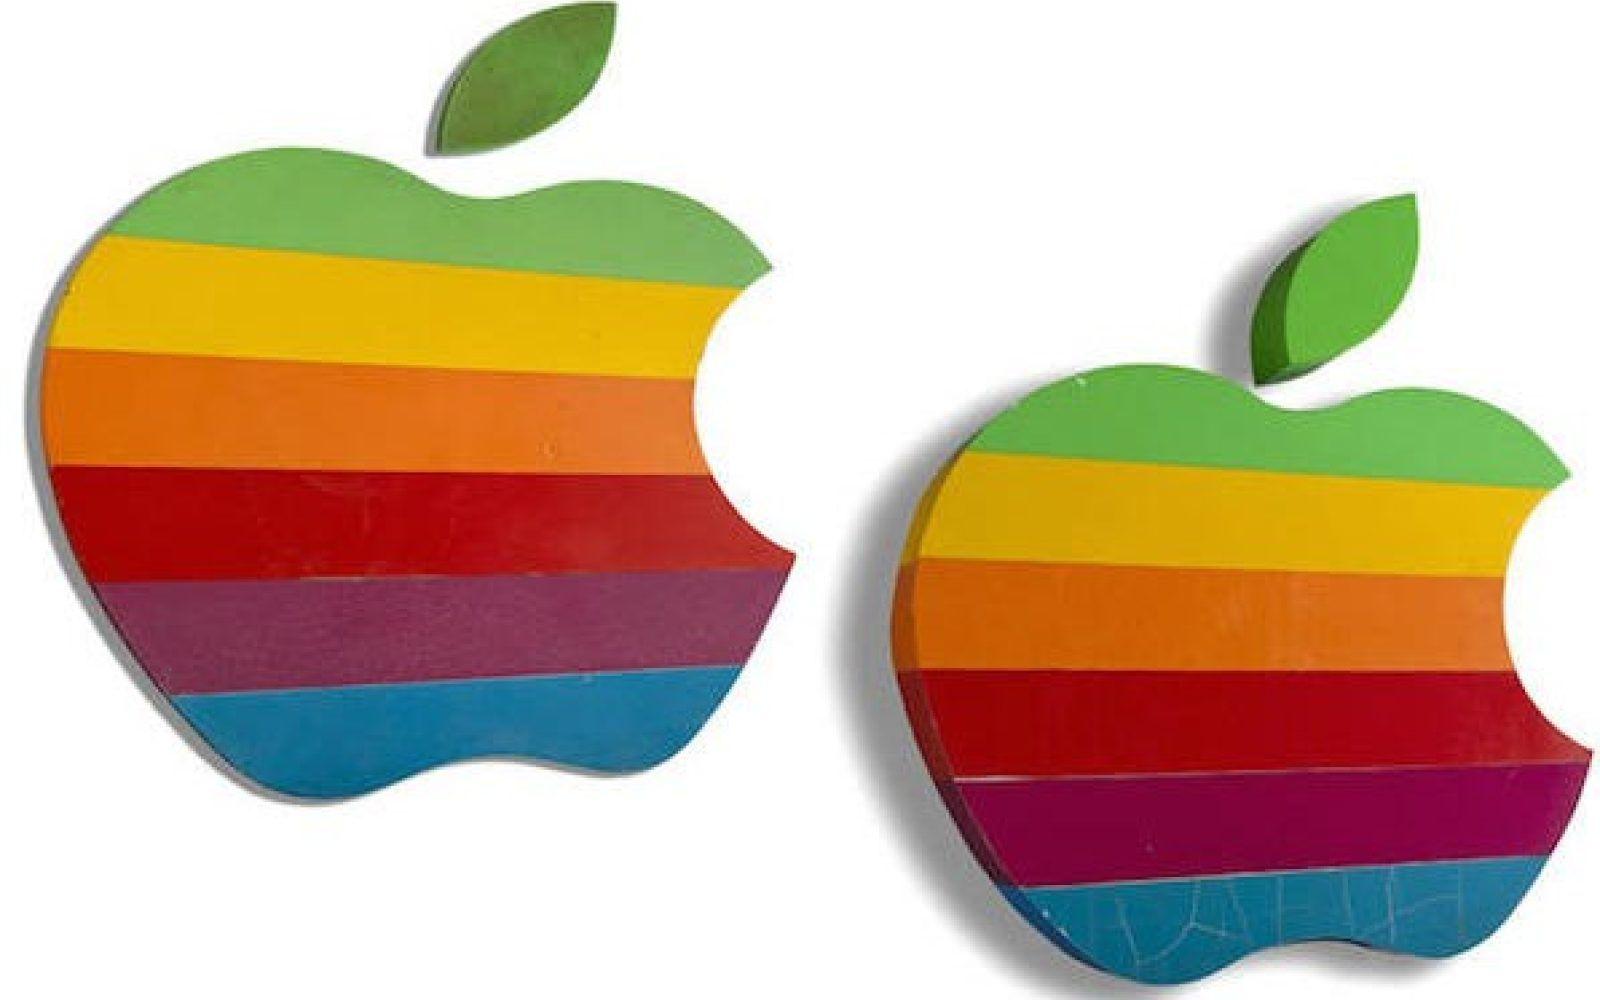 Old Macintosh Logo - Fancy a piece of Apple history? Apple's original rainbow logo signs